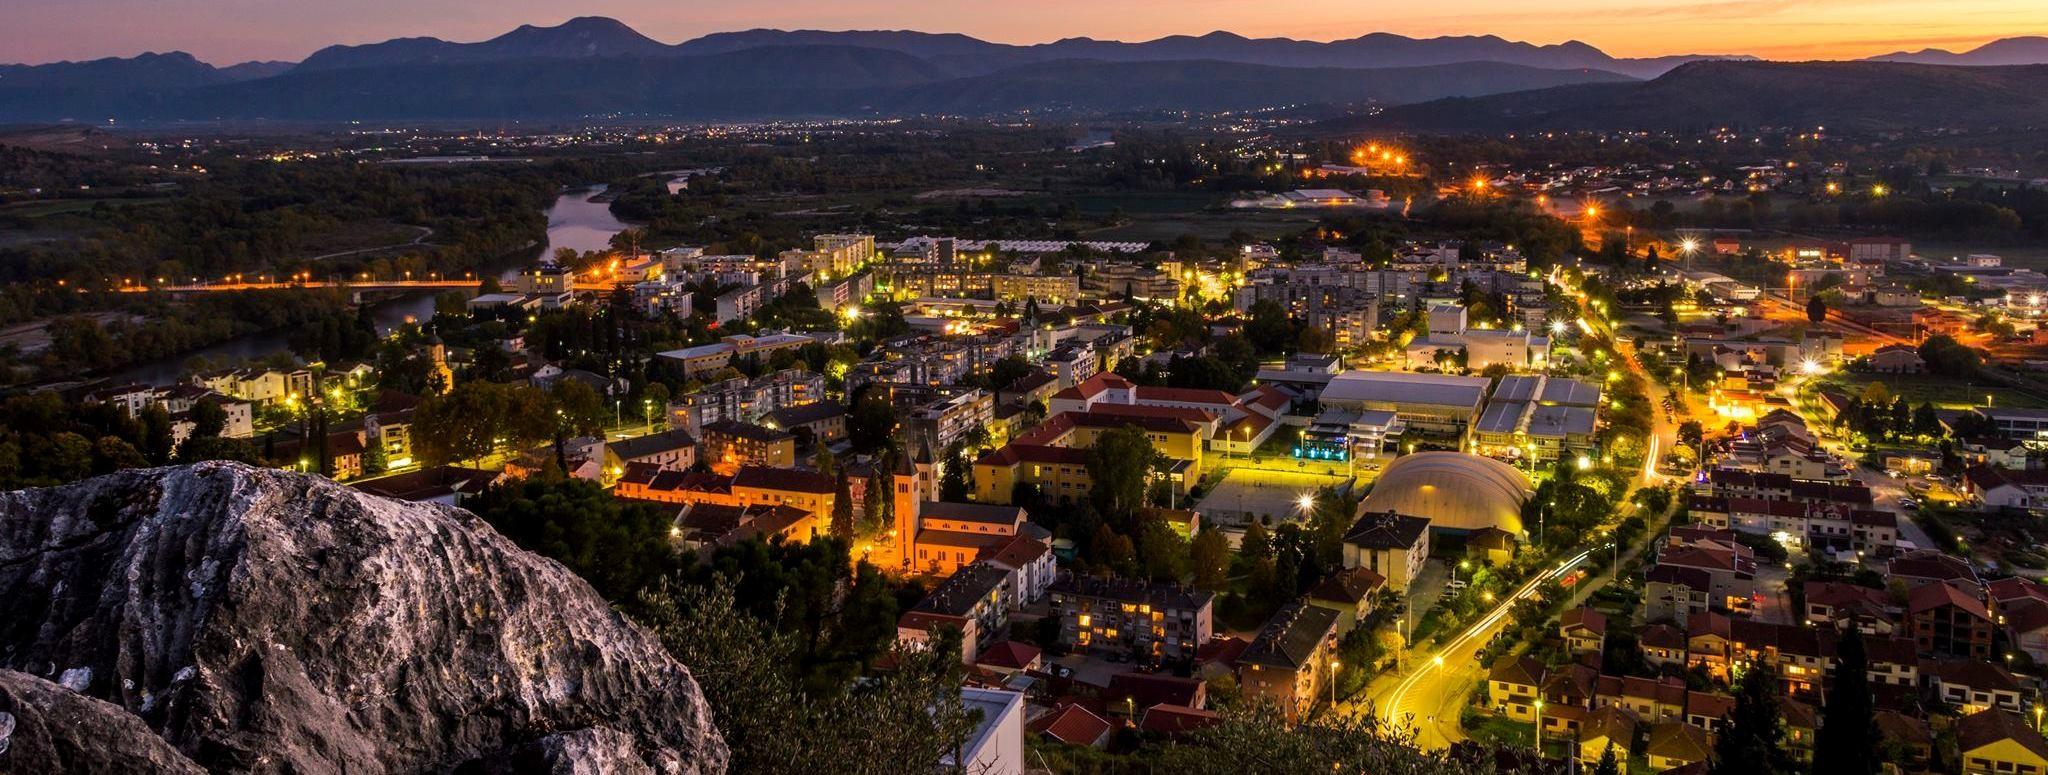 Čapljina: Na jugu Hercegovine - Avaz